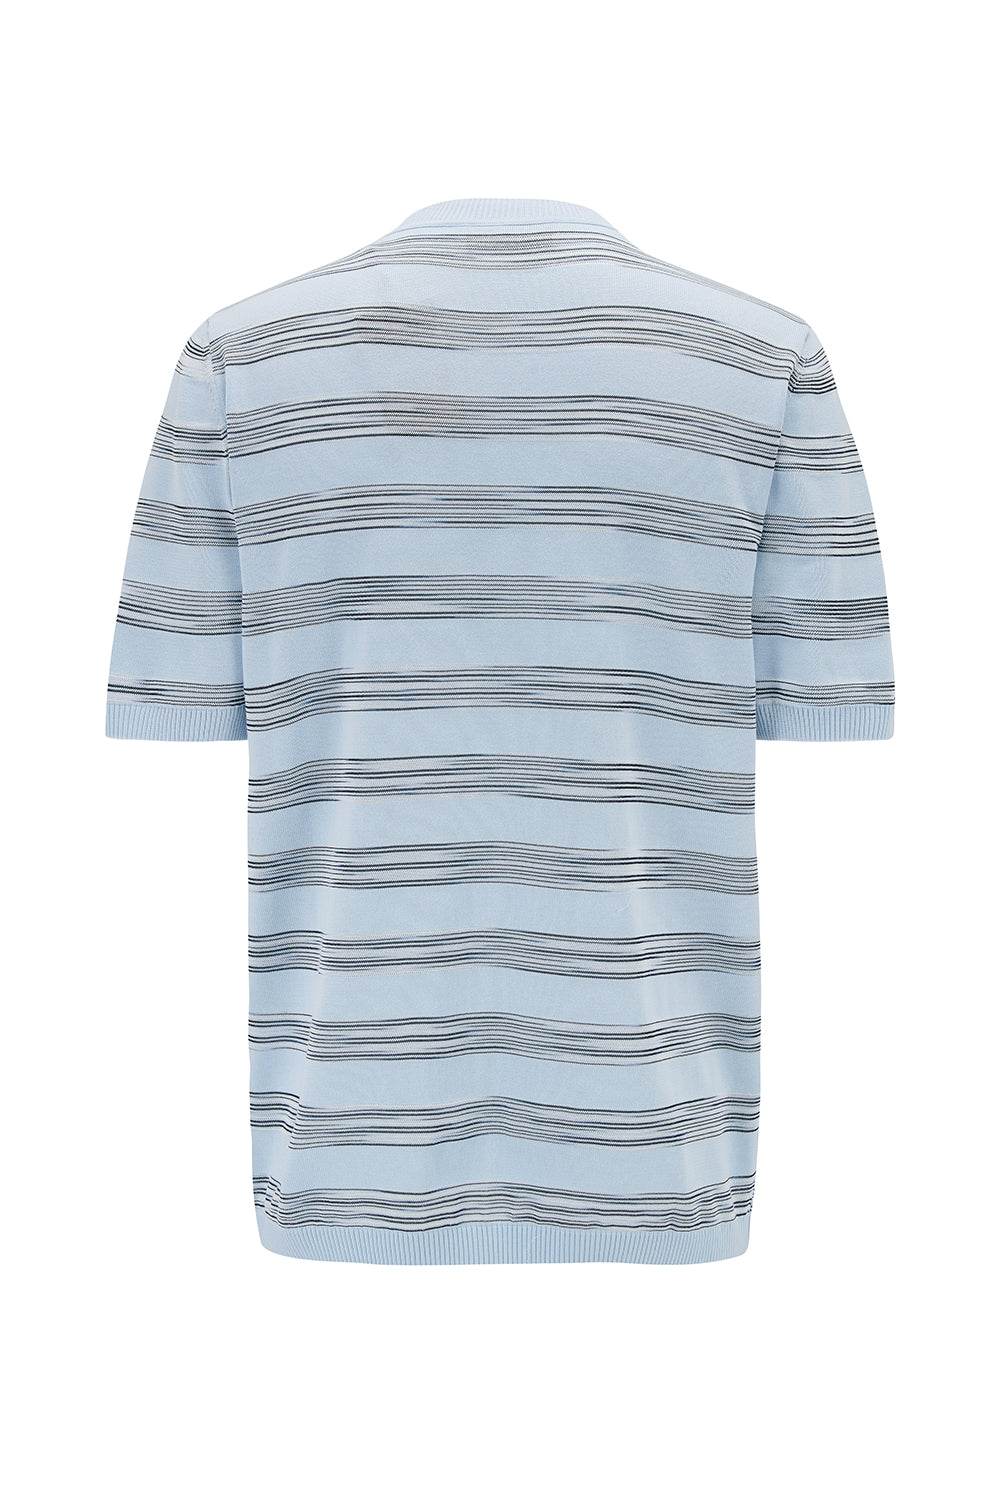 Missoni Men’s Striped Crew-Neck T-shirt Sky Blue - Back View